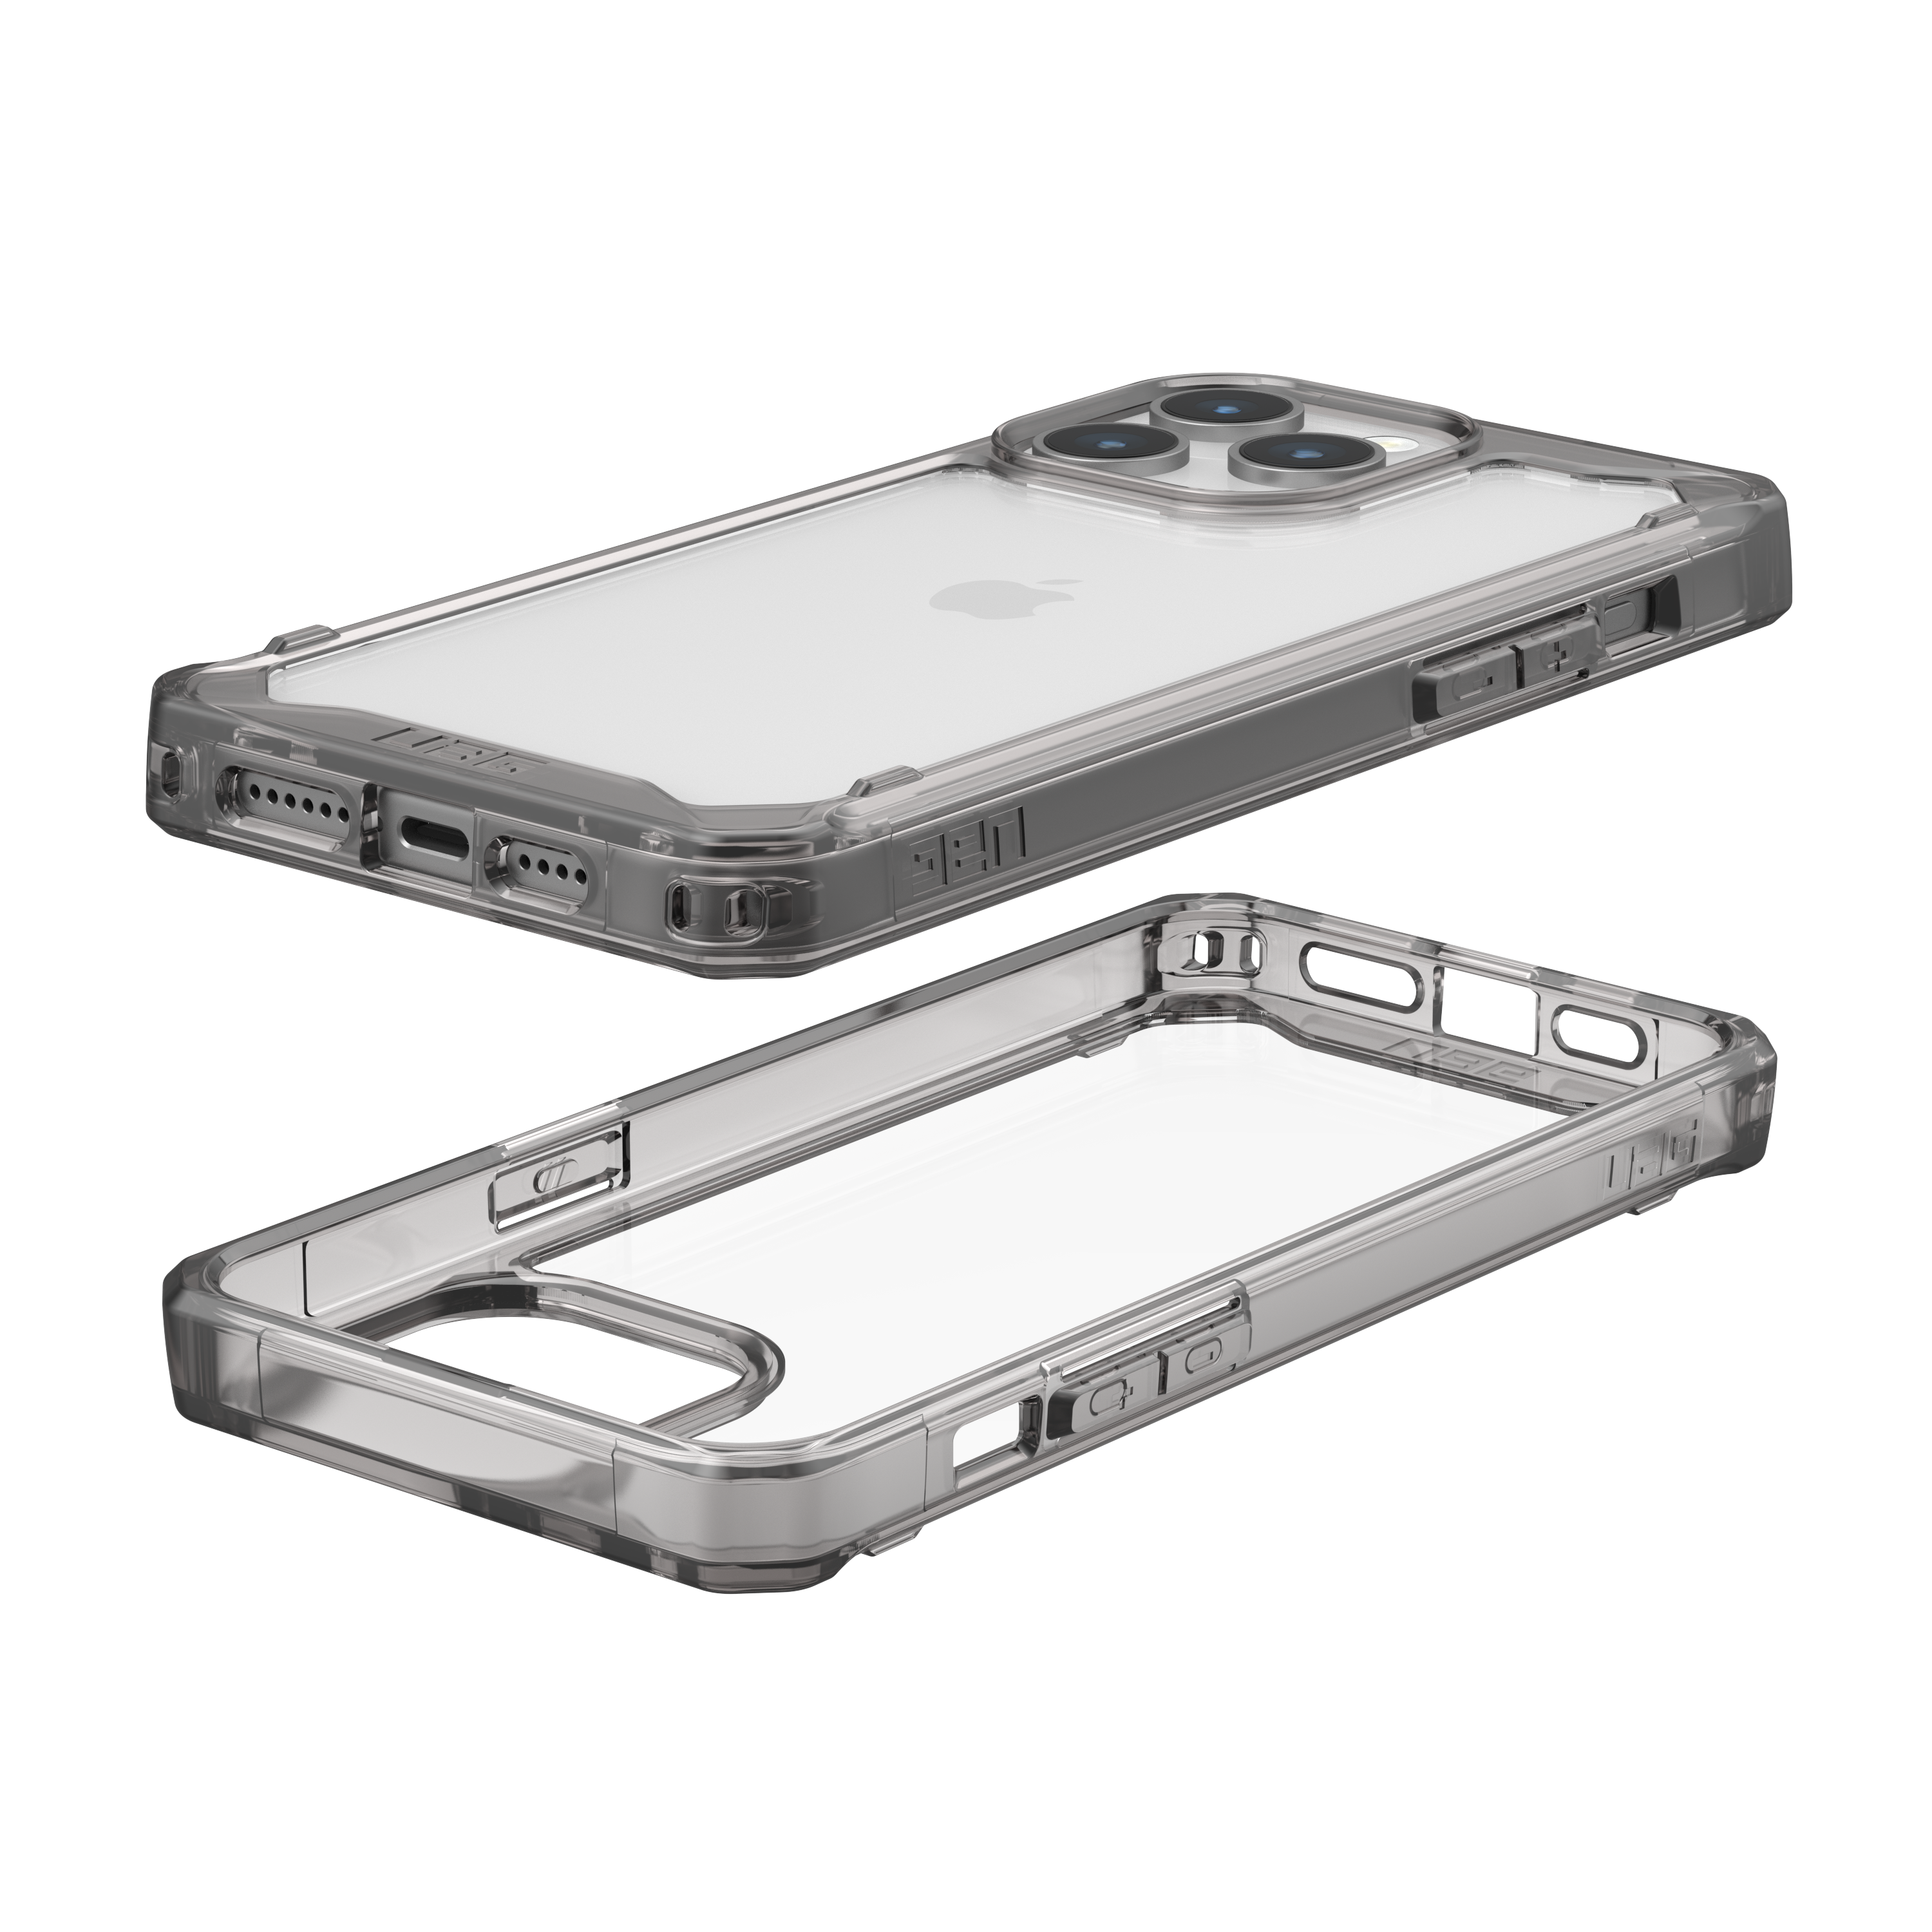 Plyo, ARMOR (grau ash 15 URBAN iPhone GEAR Backcover, Apple, transparent) Pro,